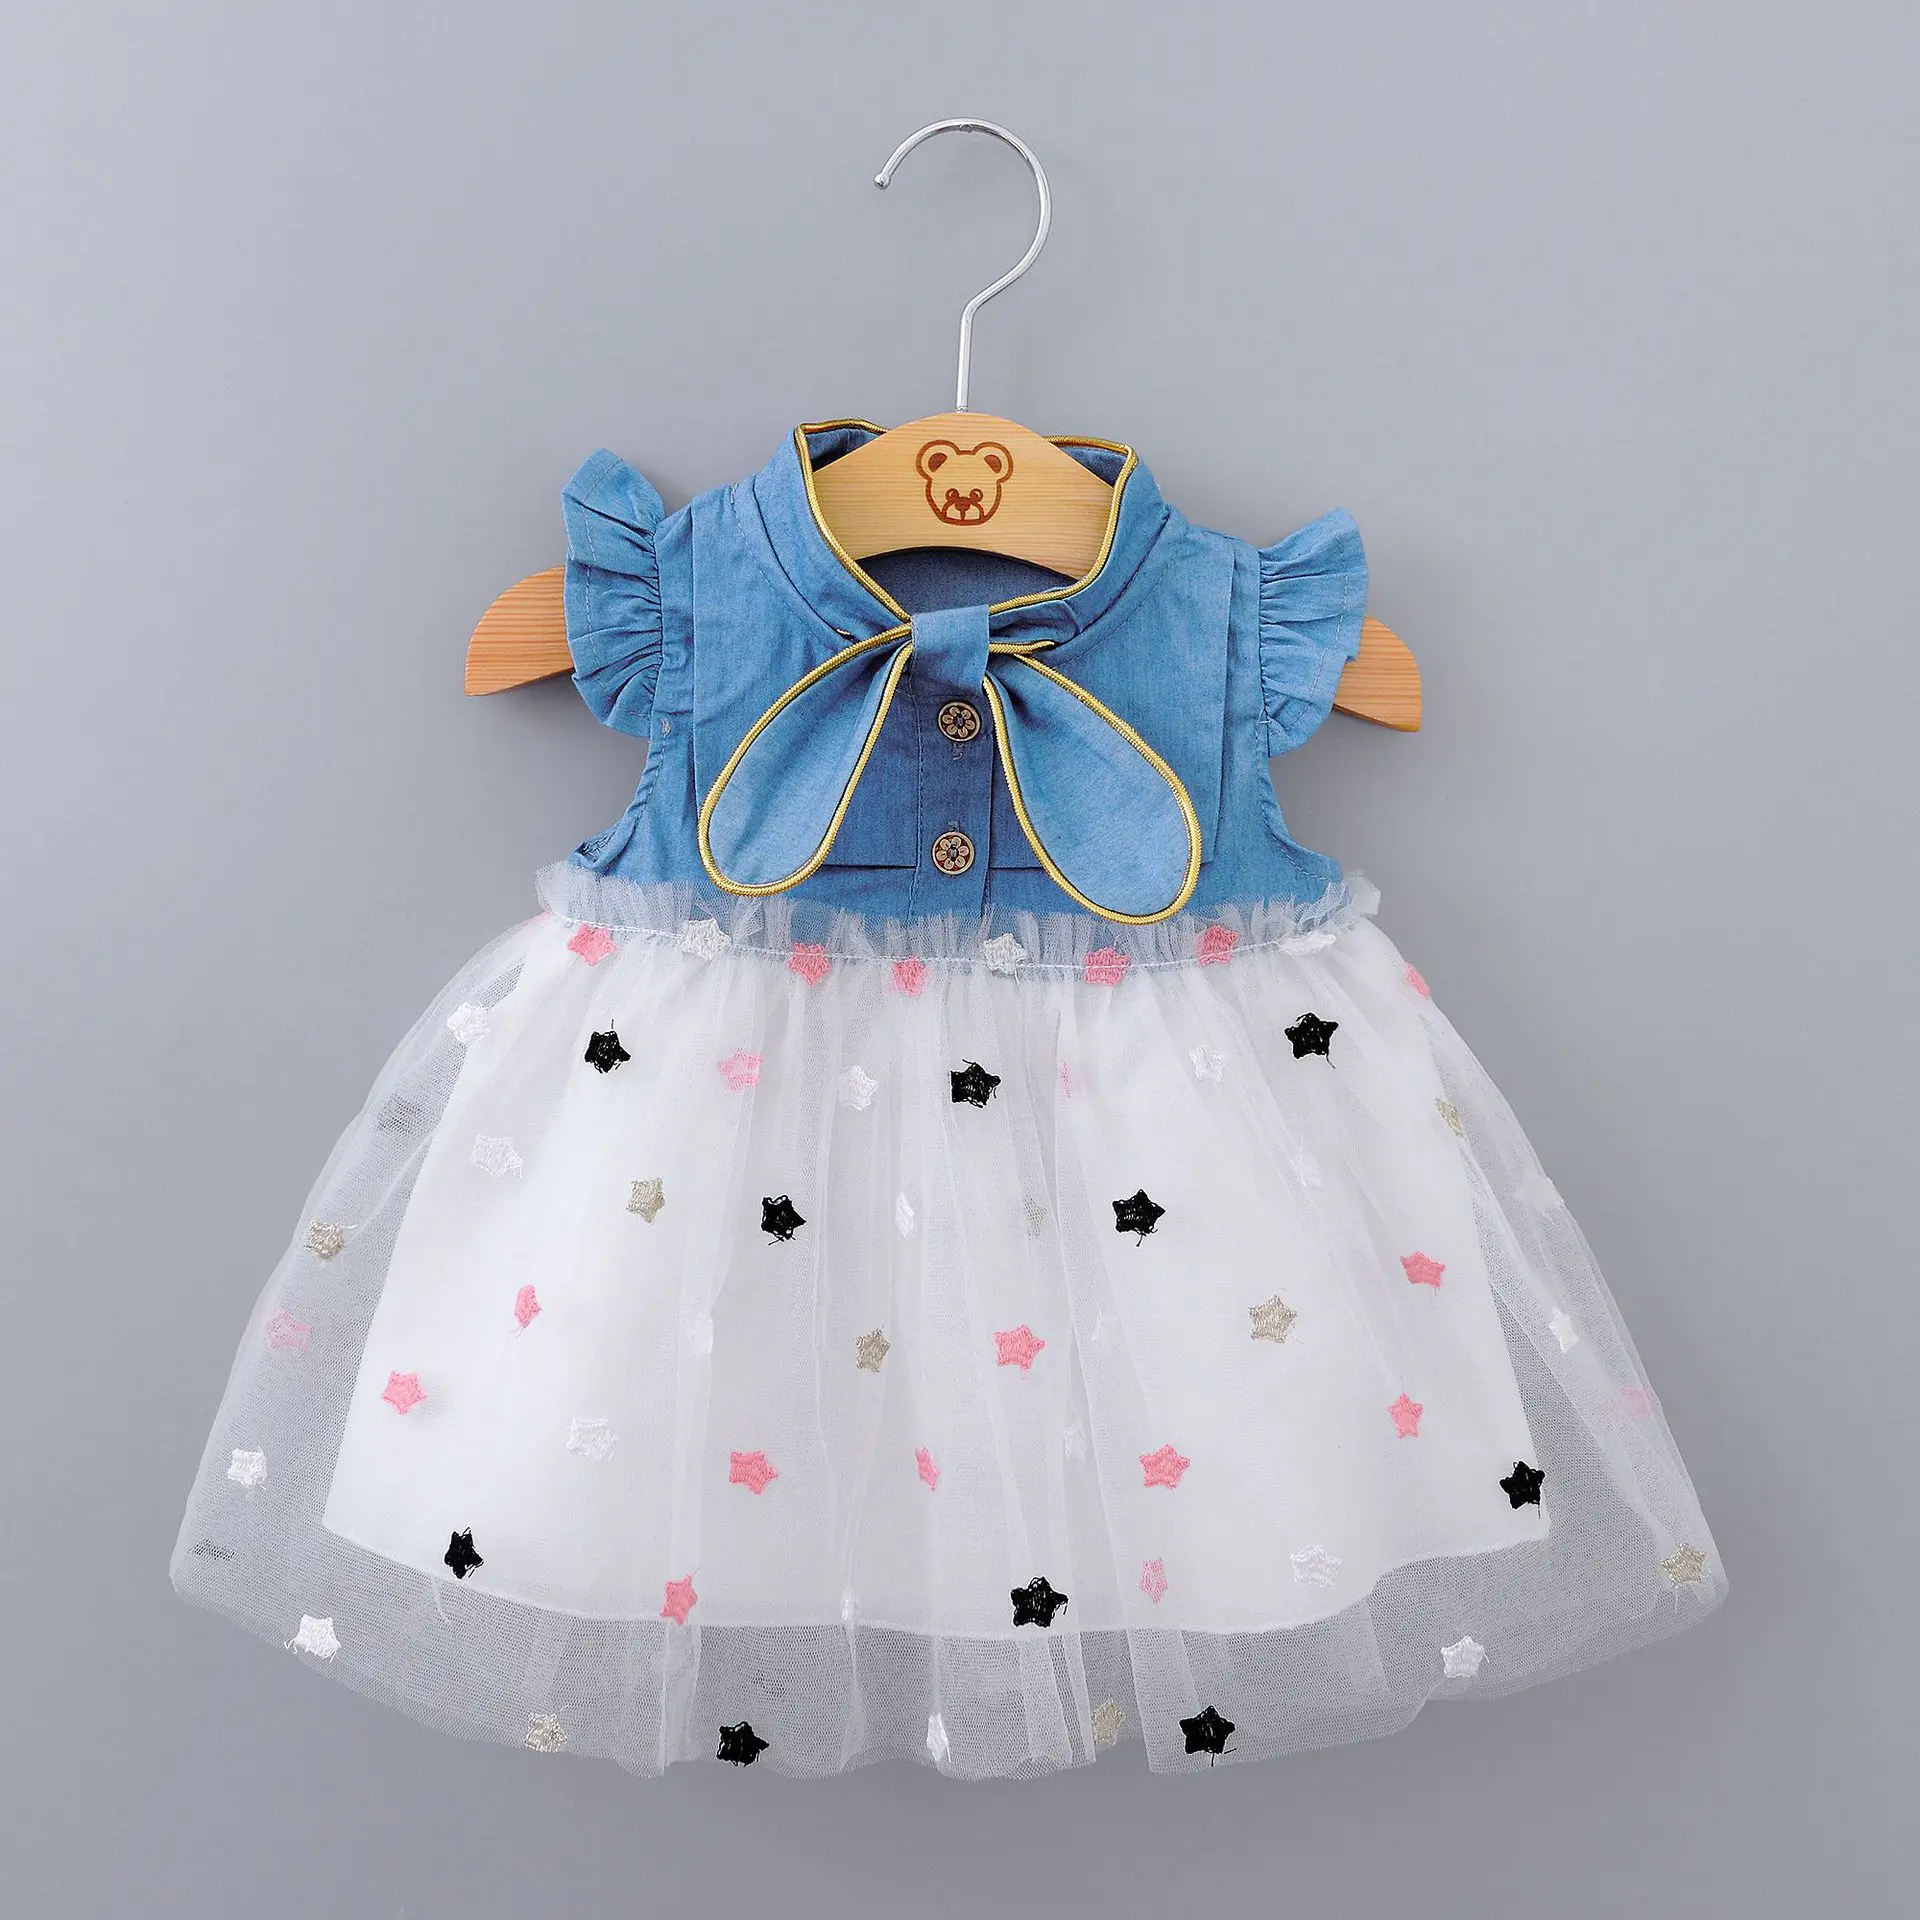 

Baby Girls Summer Dress Princess Party Tulle Toddler Dresses Infant Clothing Newborn Party Birthday tutu Dress 0-2Y Vestidos